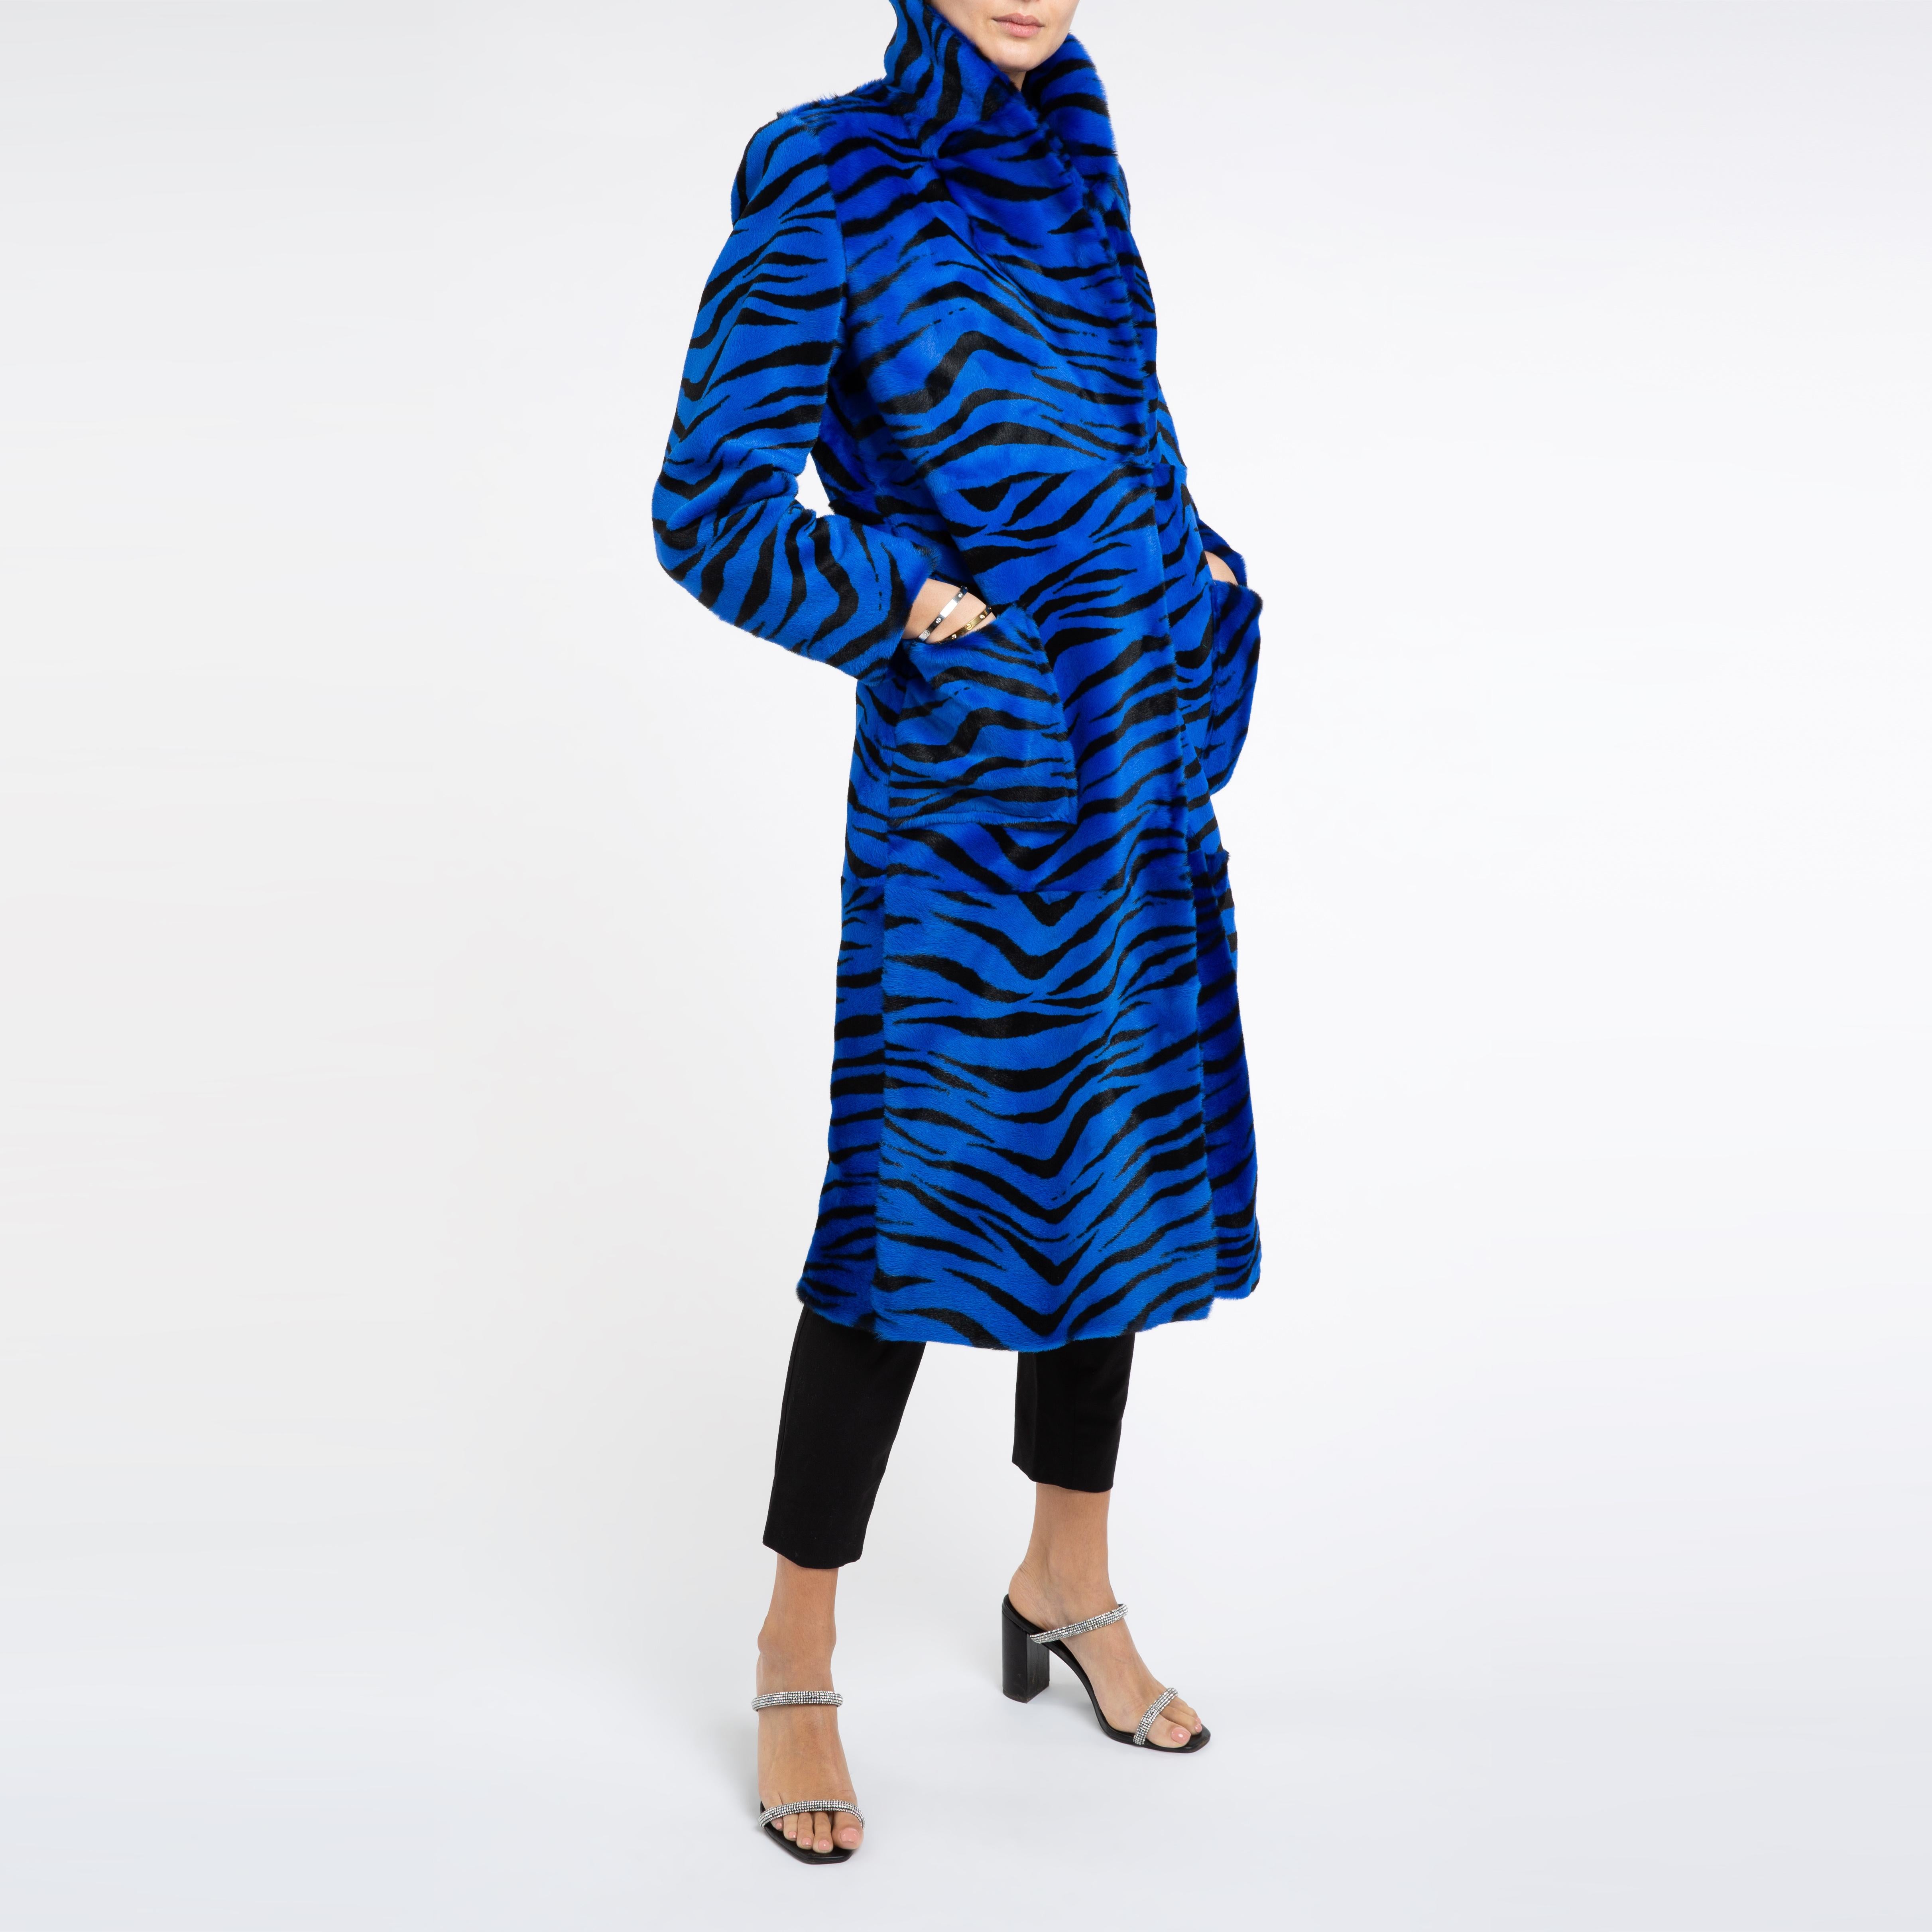 Verheyen London Shearling Coat in Blue Zebra Print size uk 8-10 For Sale 6